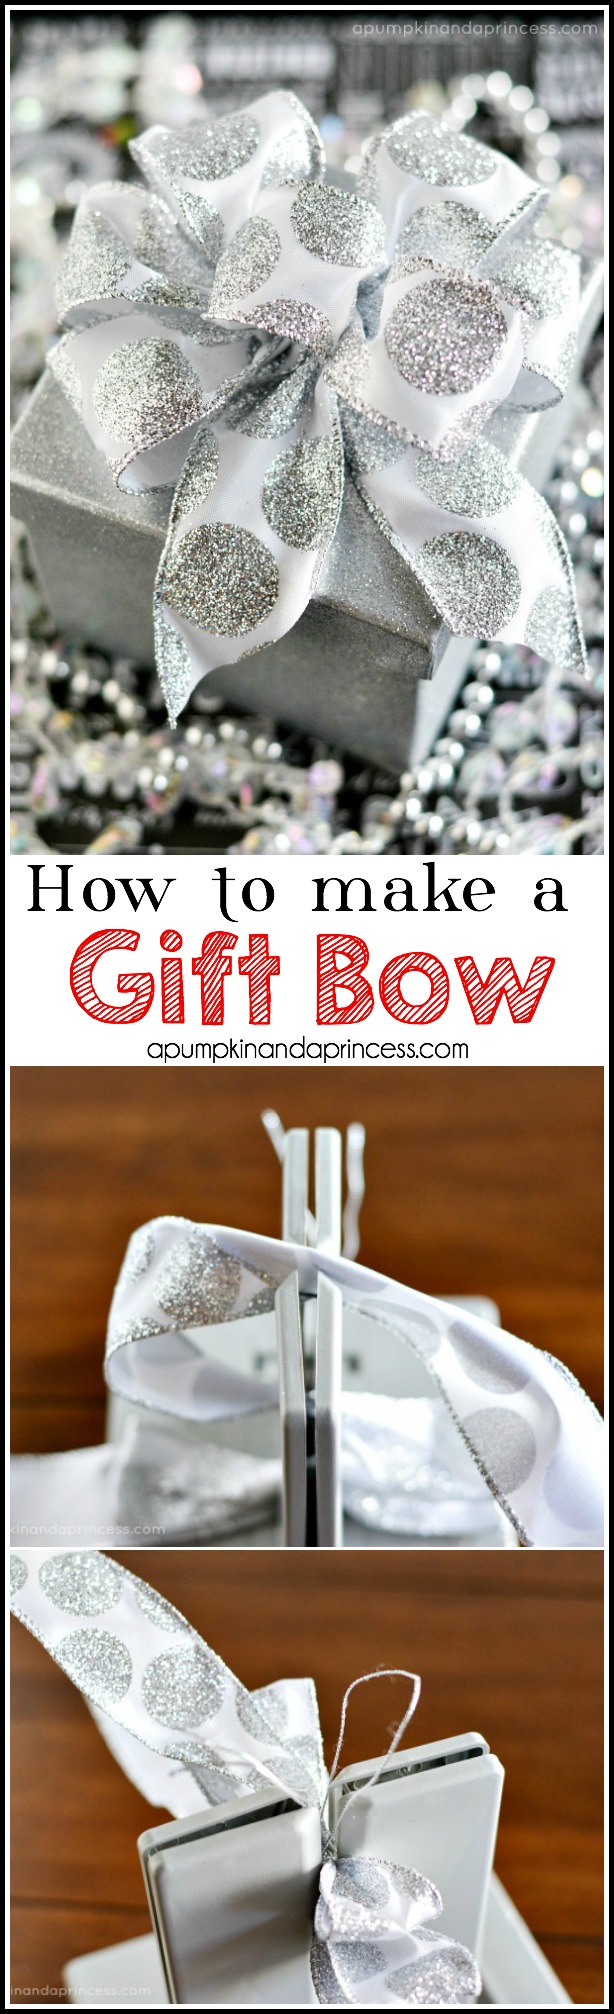 DIY gift bow